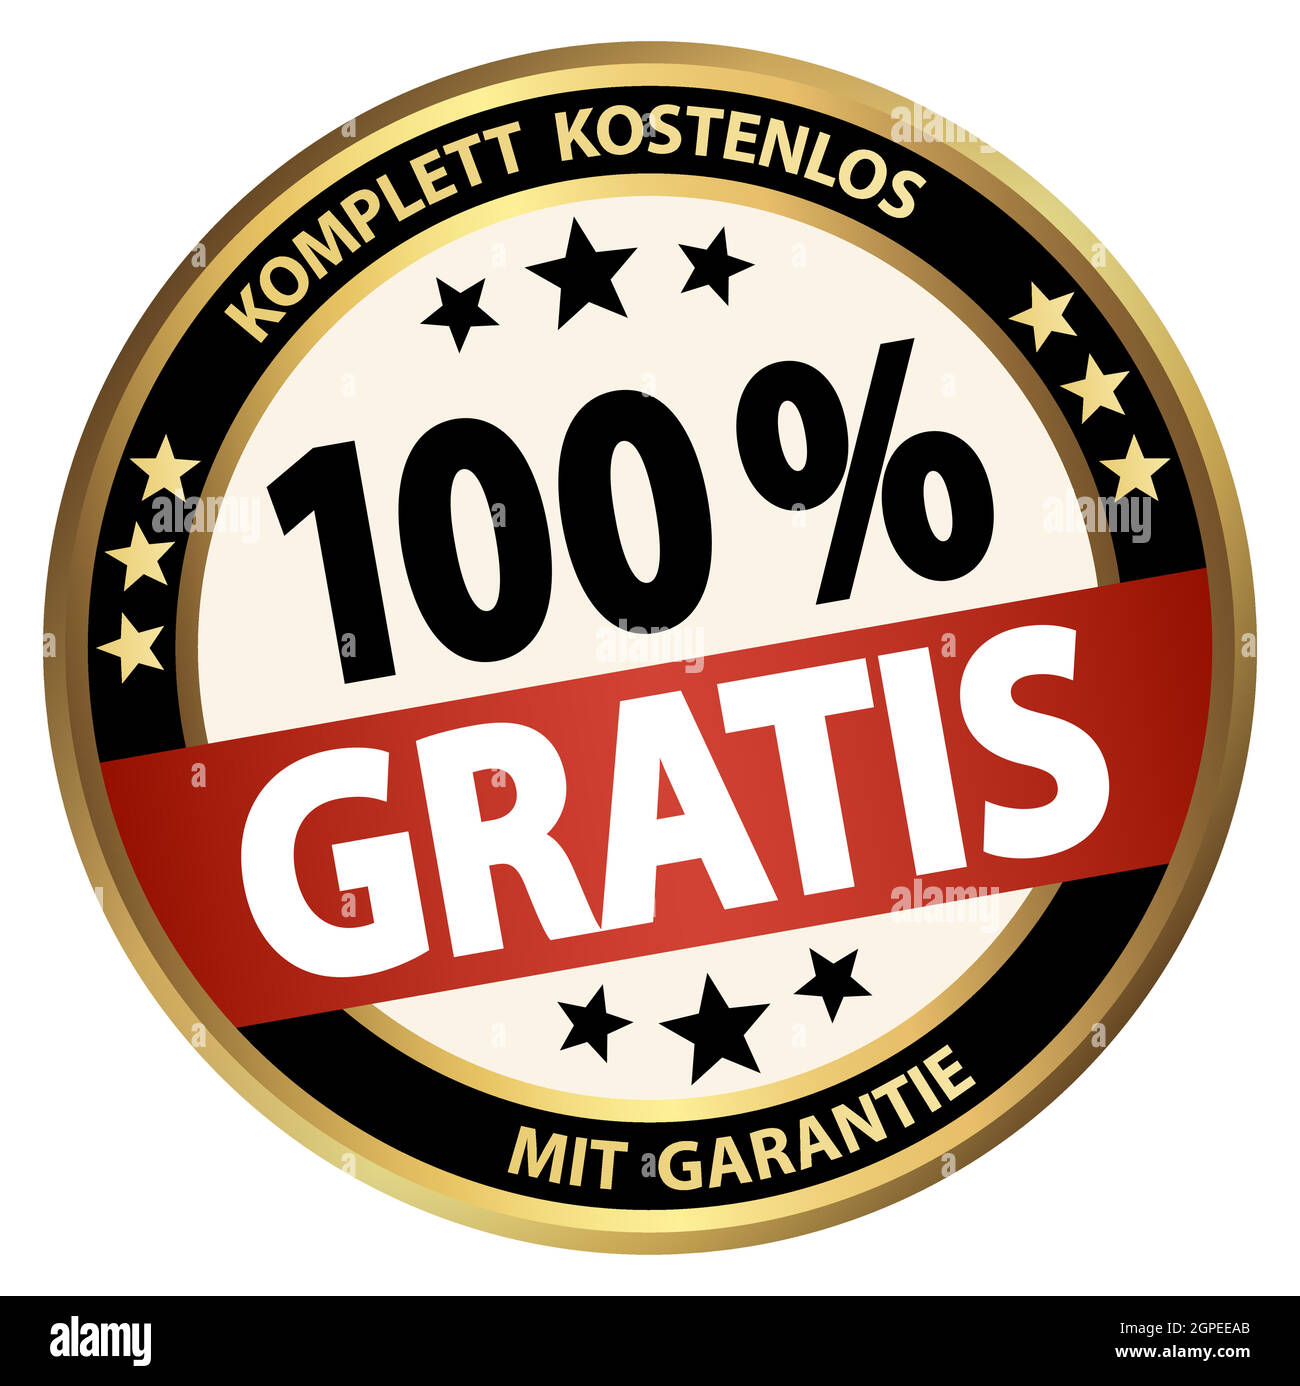 round business button - 100% gratis (german) Stock Vector